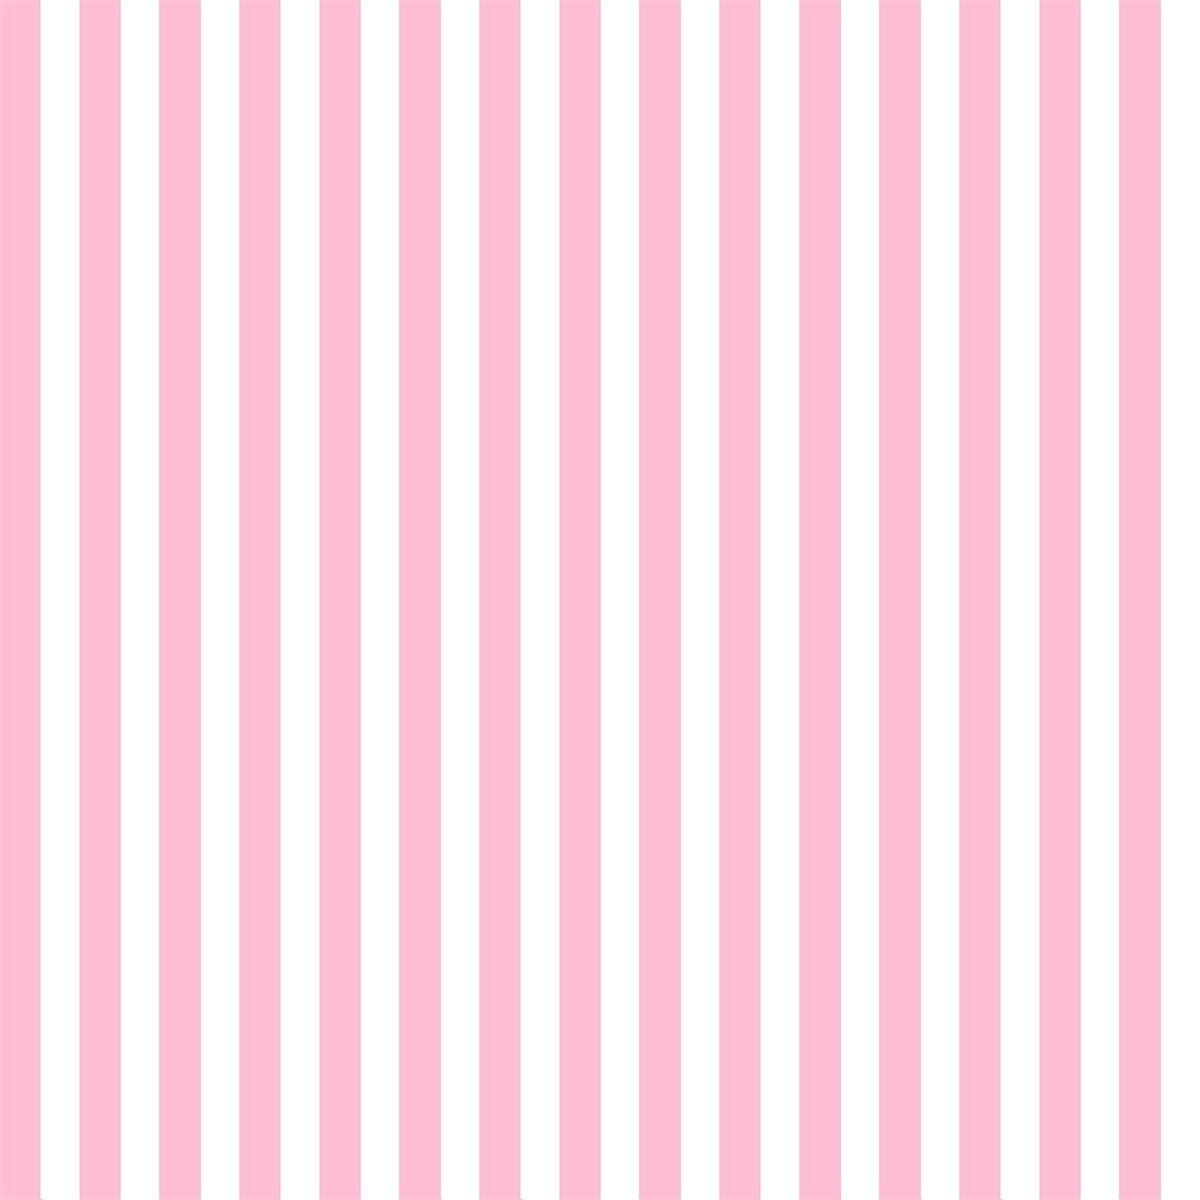 Cute Pink Retro Border / Frame On Pink Stripe Background Royalty